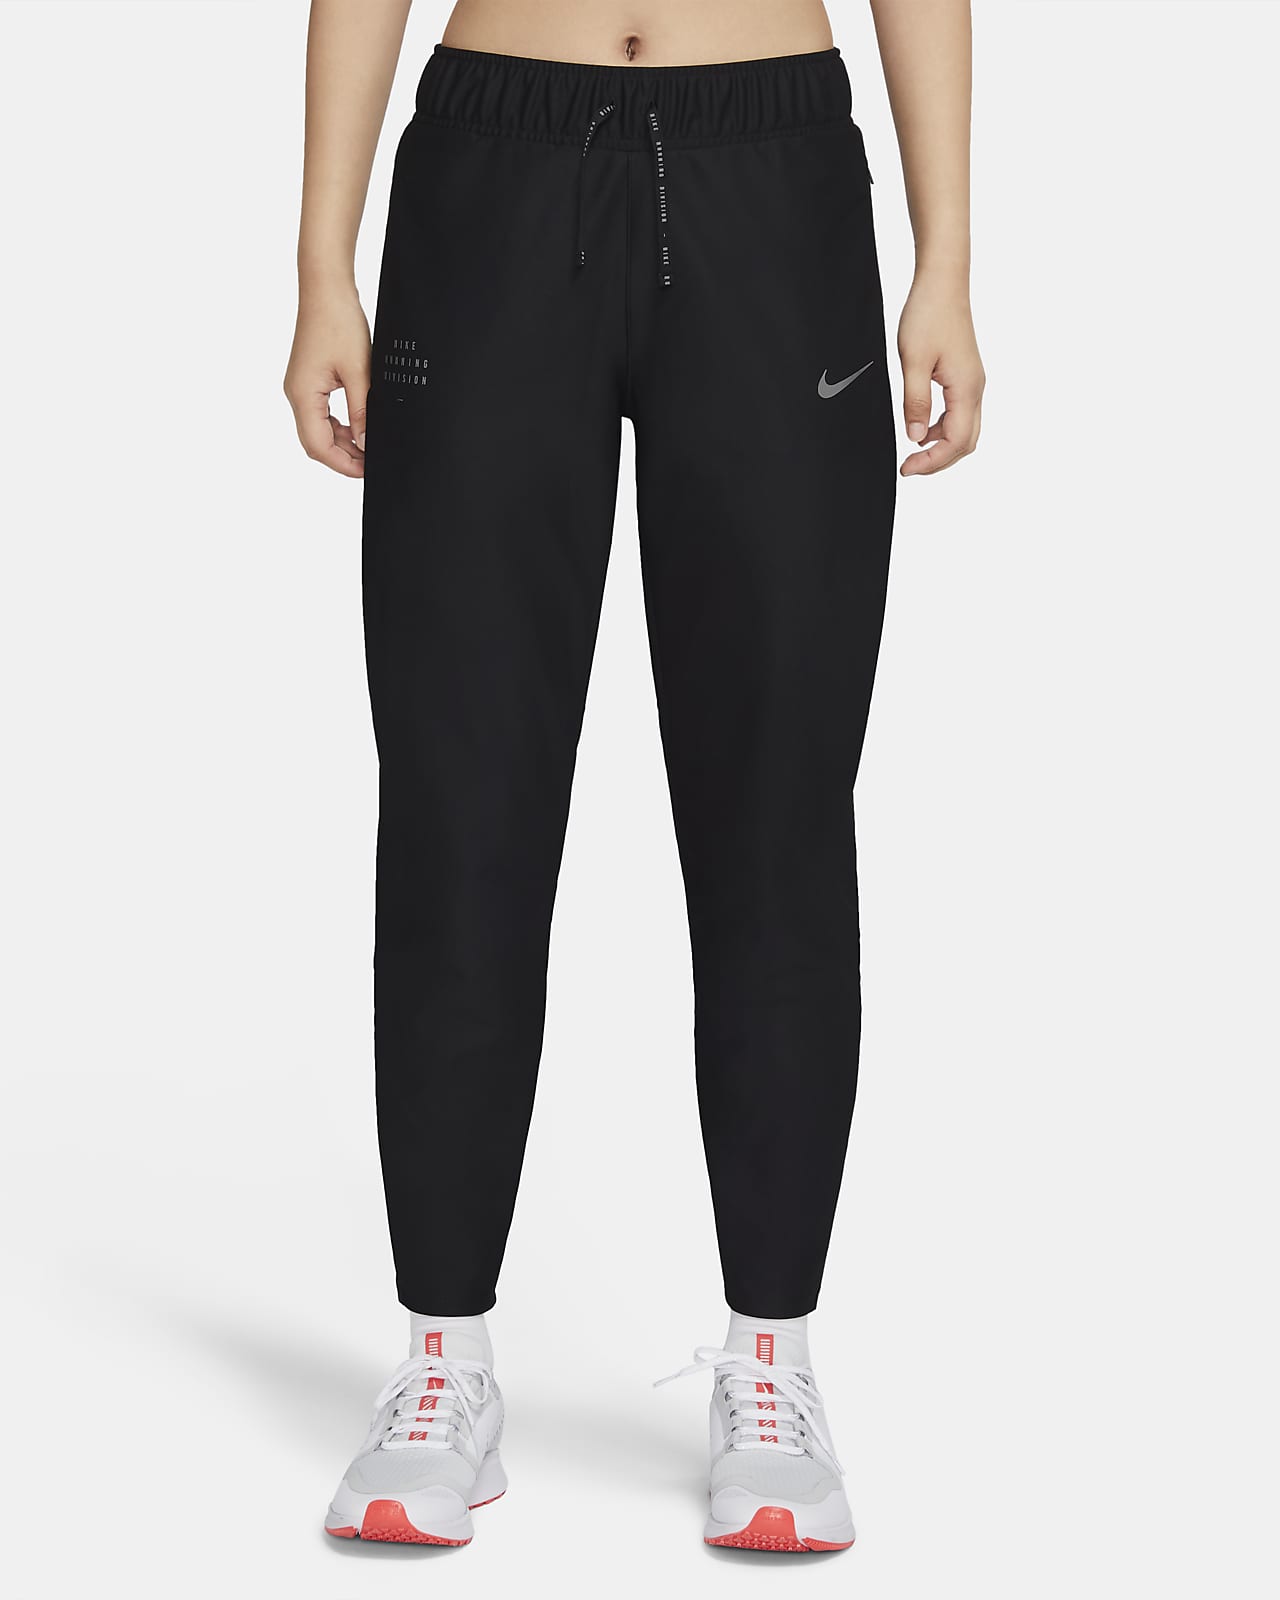 Womens Running Pants & Tights. Nike JP